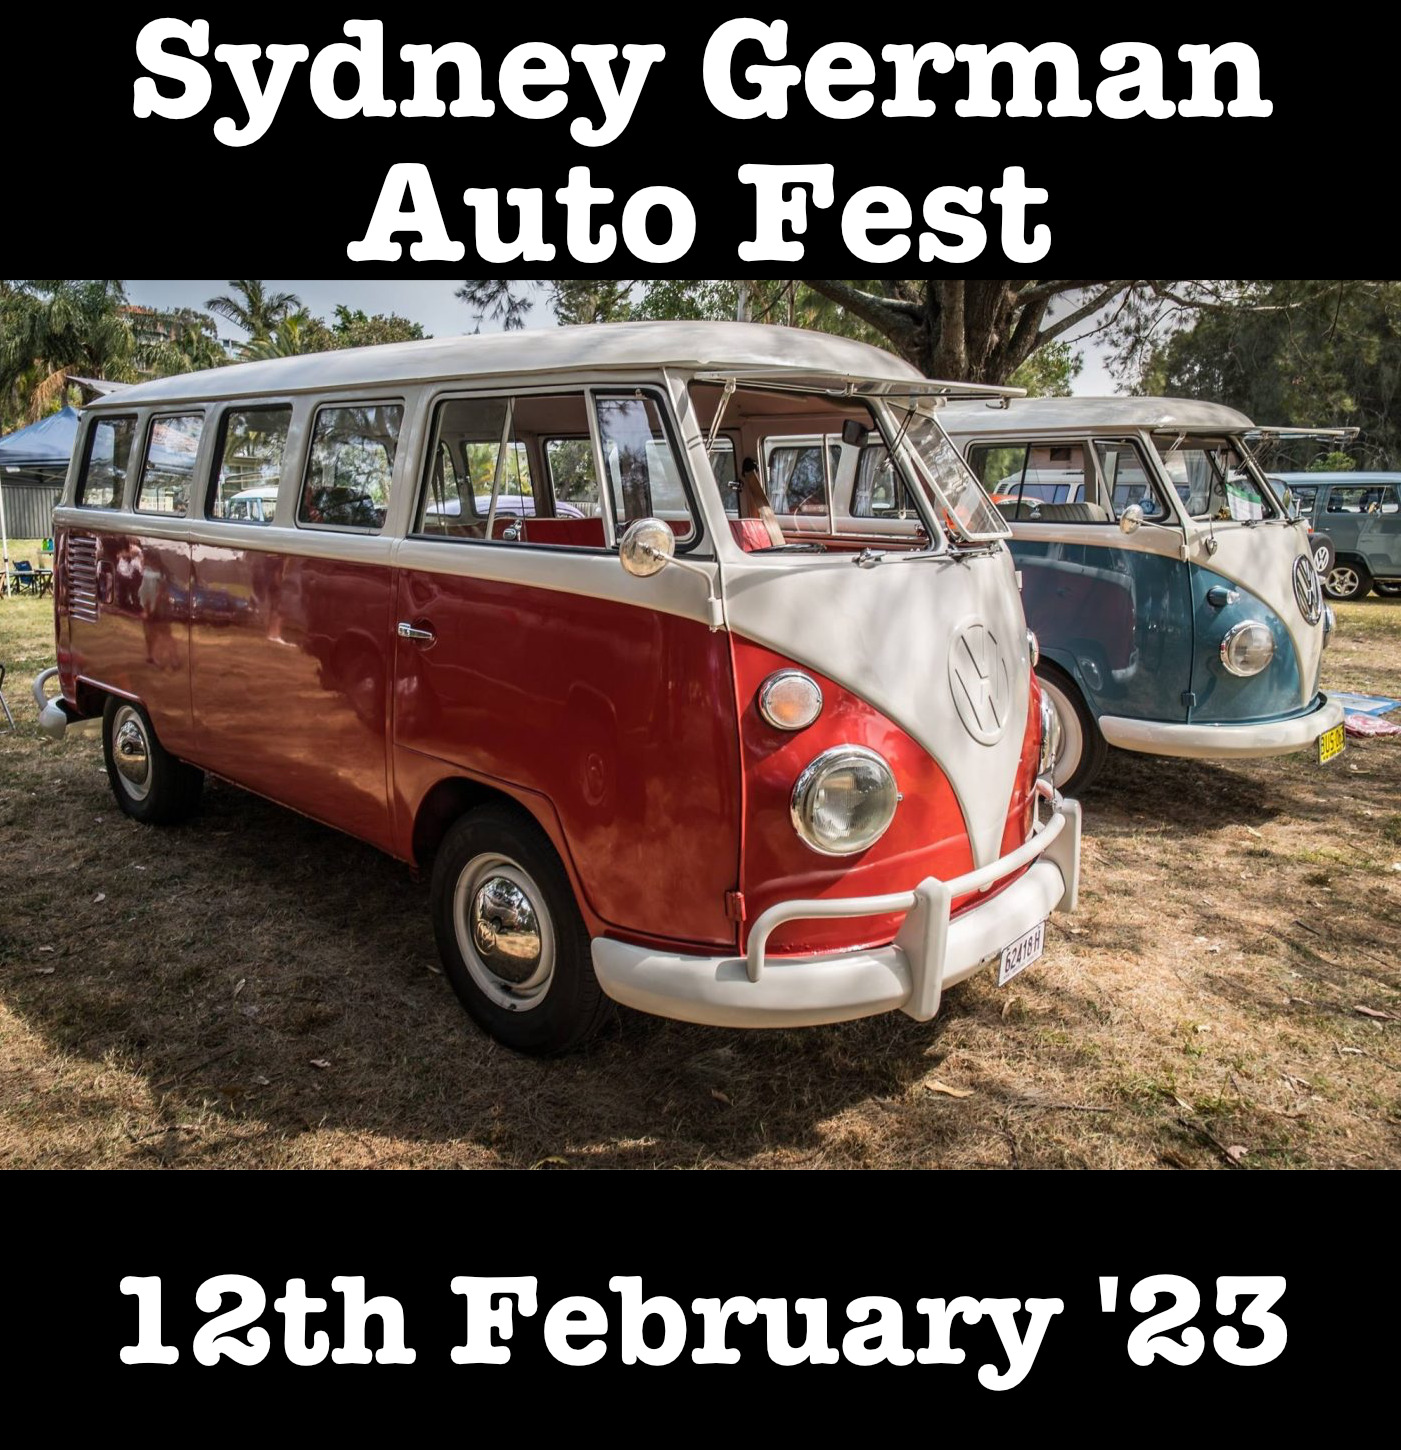 Sydney German Auto-Fest